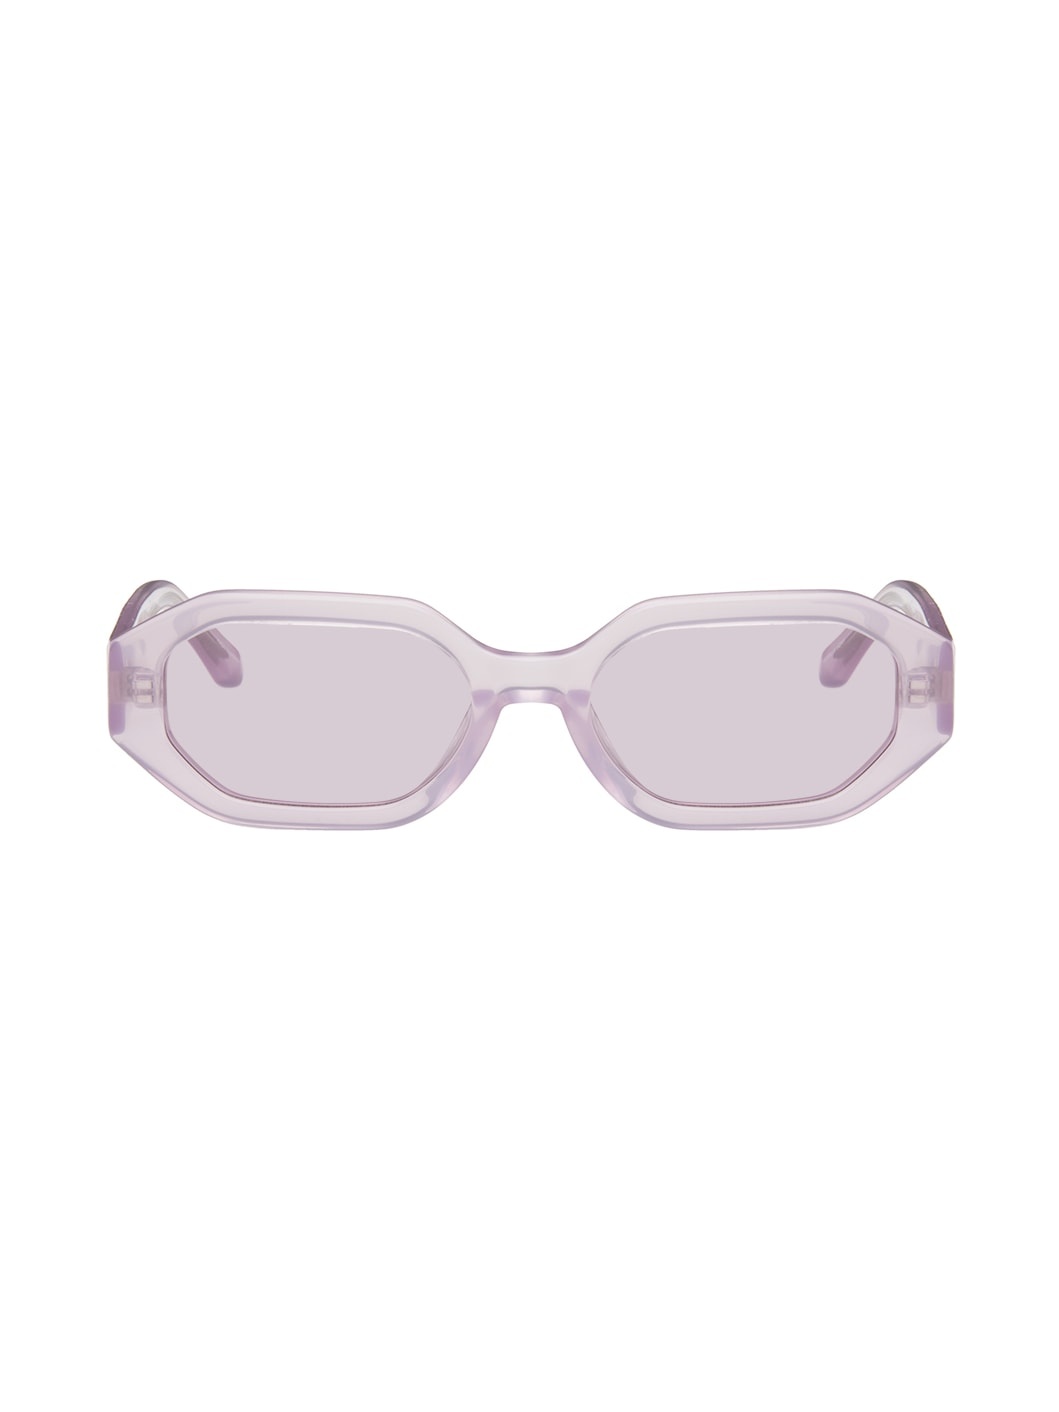 Pink Linda Farrow Edition Irene Sunglasses - 1